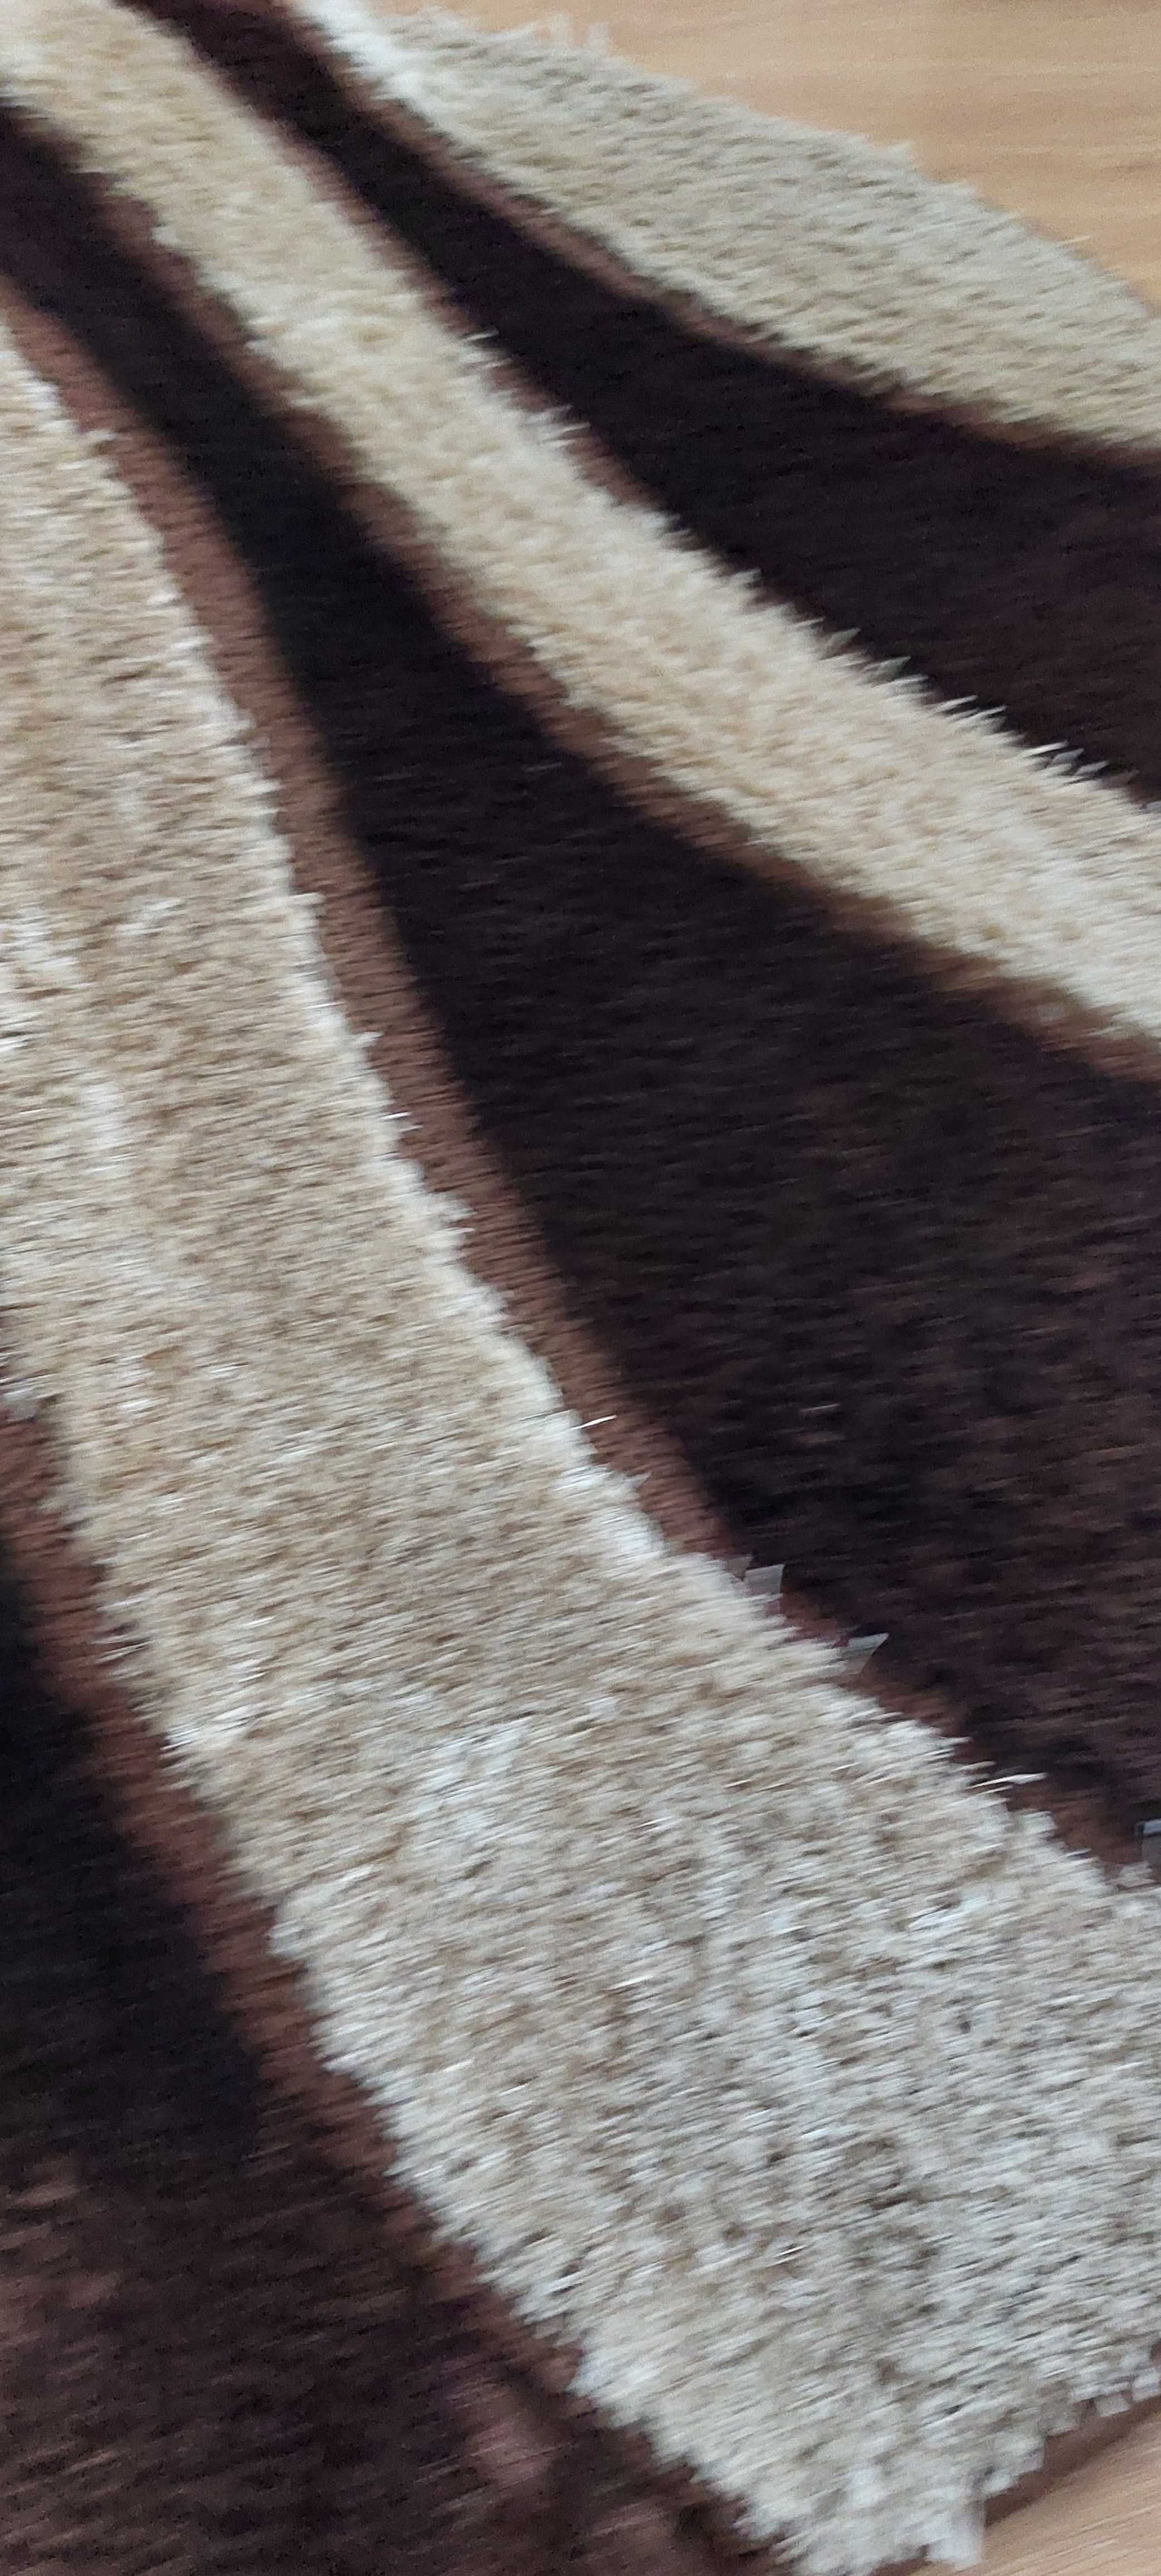 Carpete redonda castanha e branco sujo